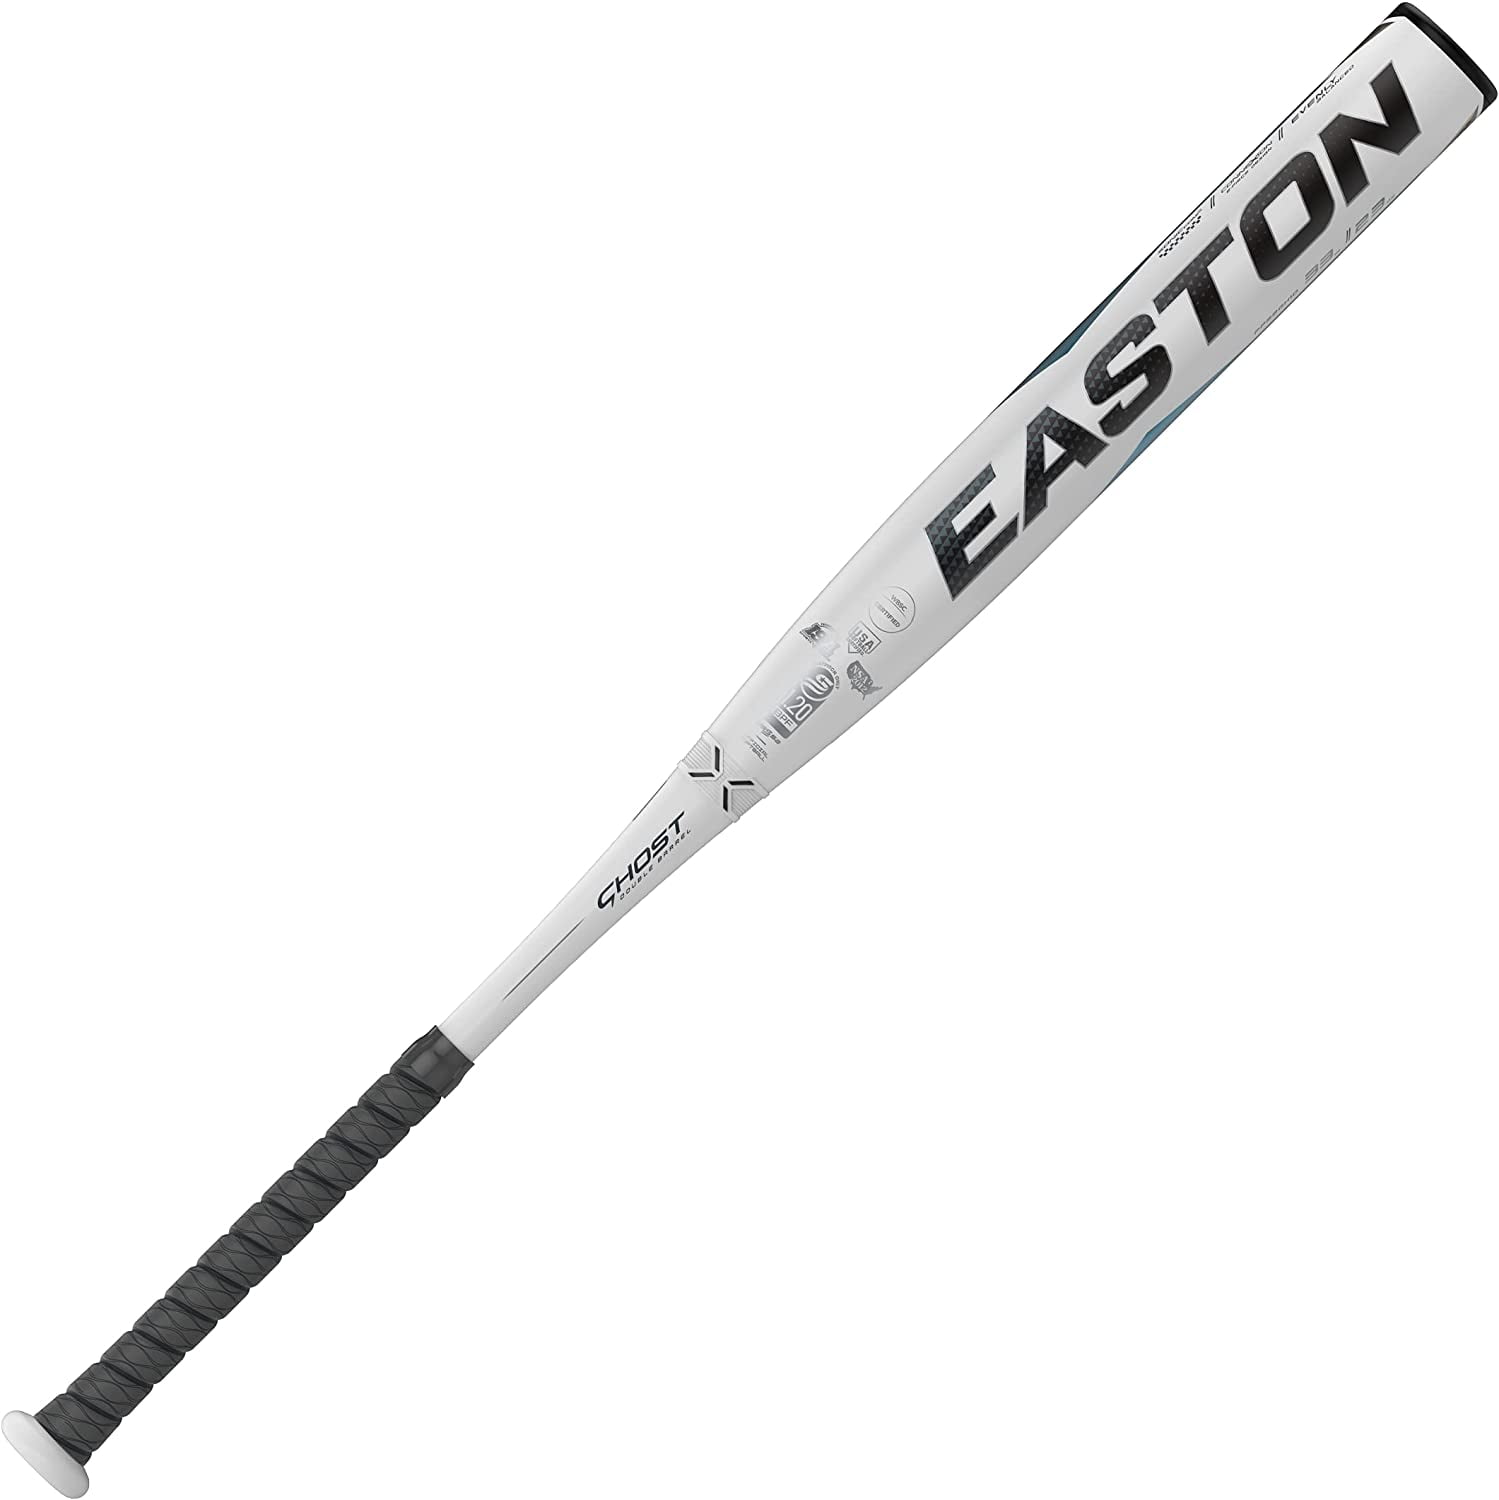 Easton 2022 Ghost Double Barrel Fastpitch Softball Bat, 31 In. (-10) -  Walmart.com